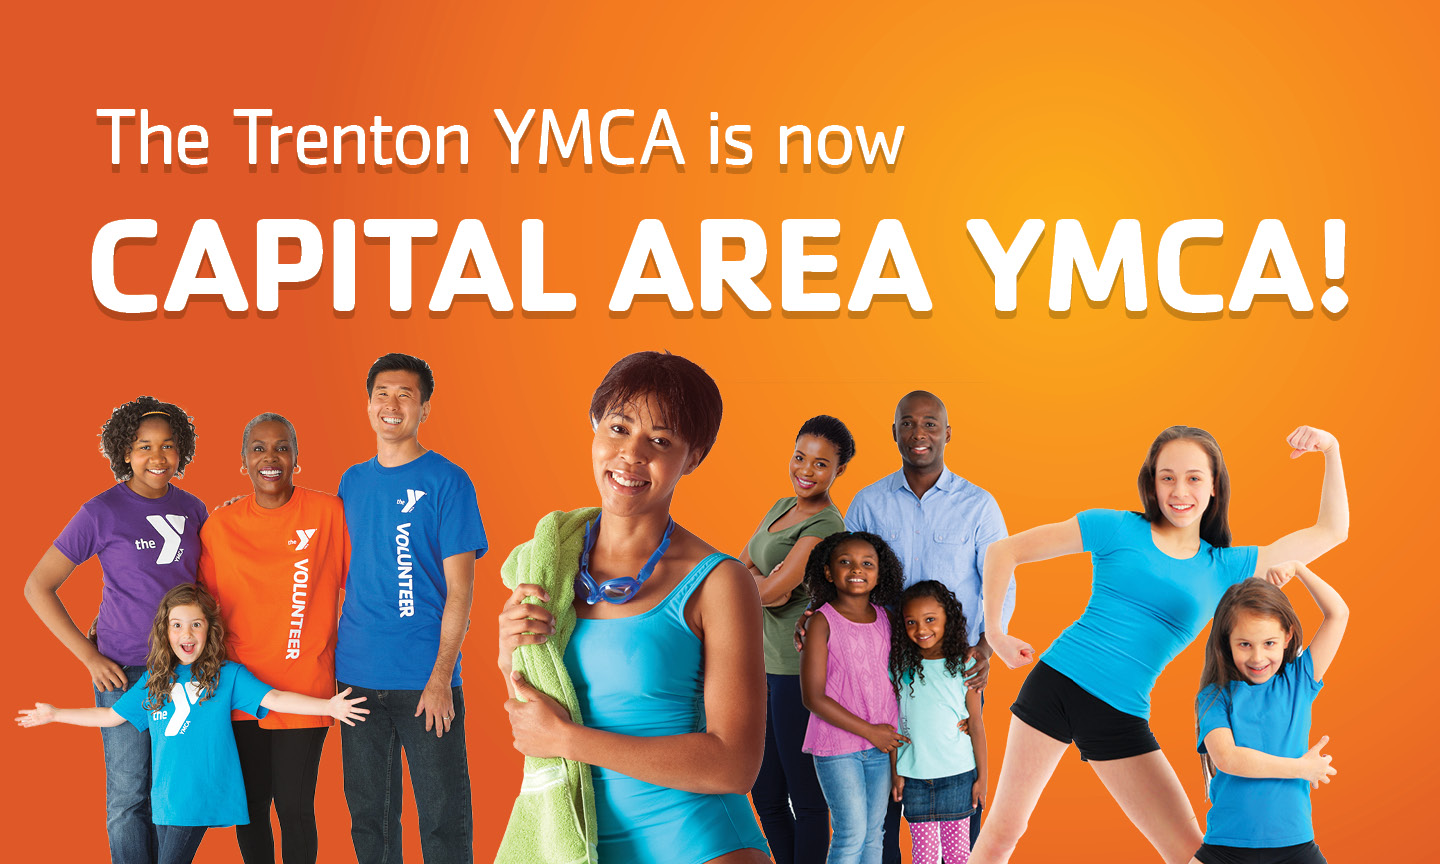 We’re now Capital Area YMCA! Capital Area YMCA